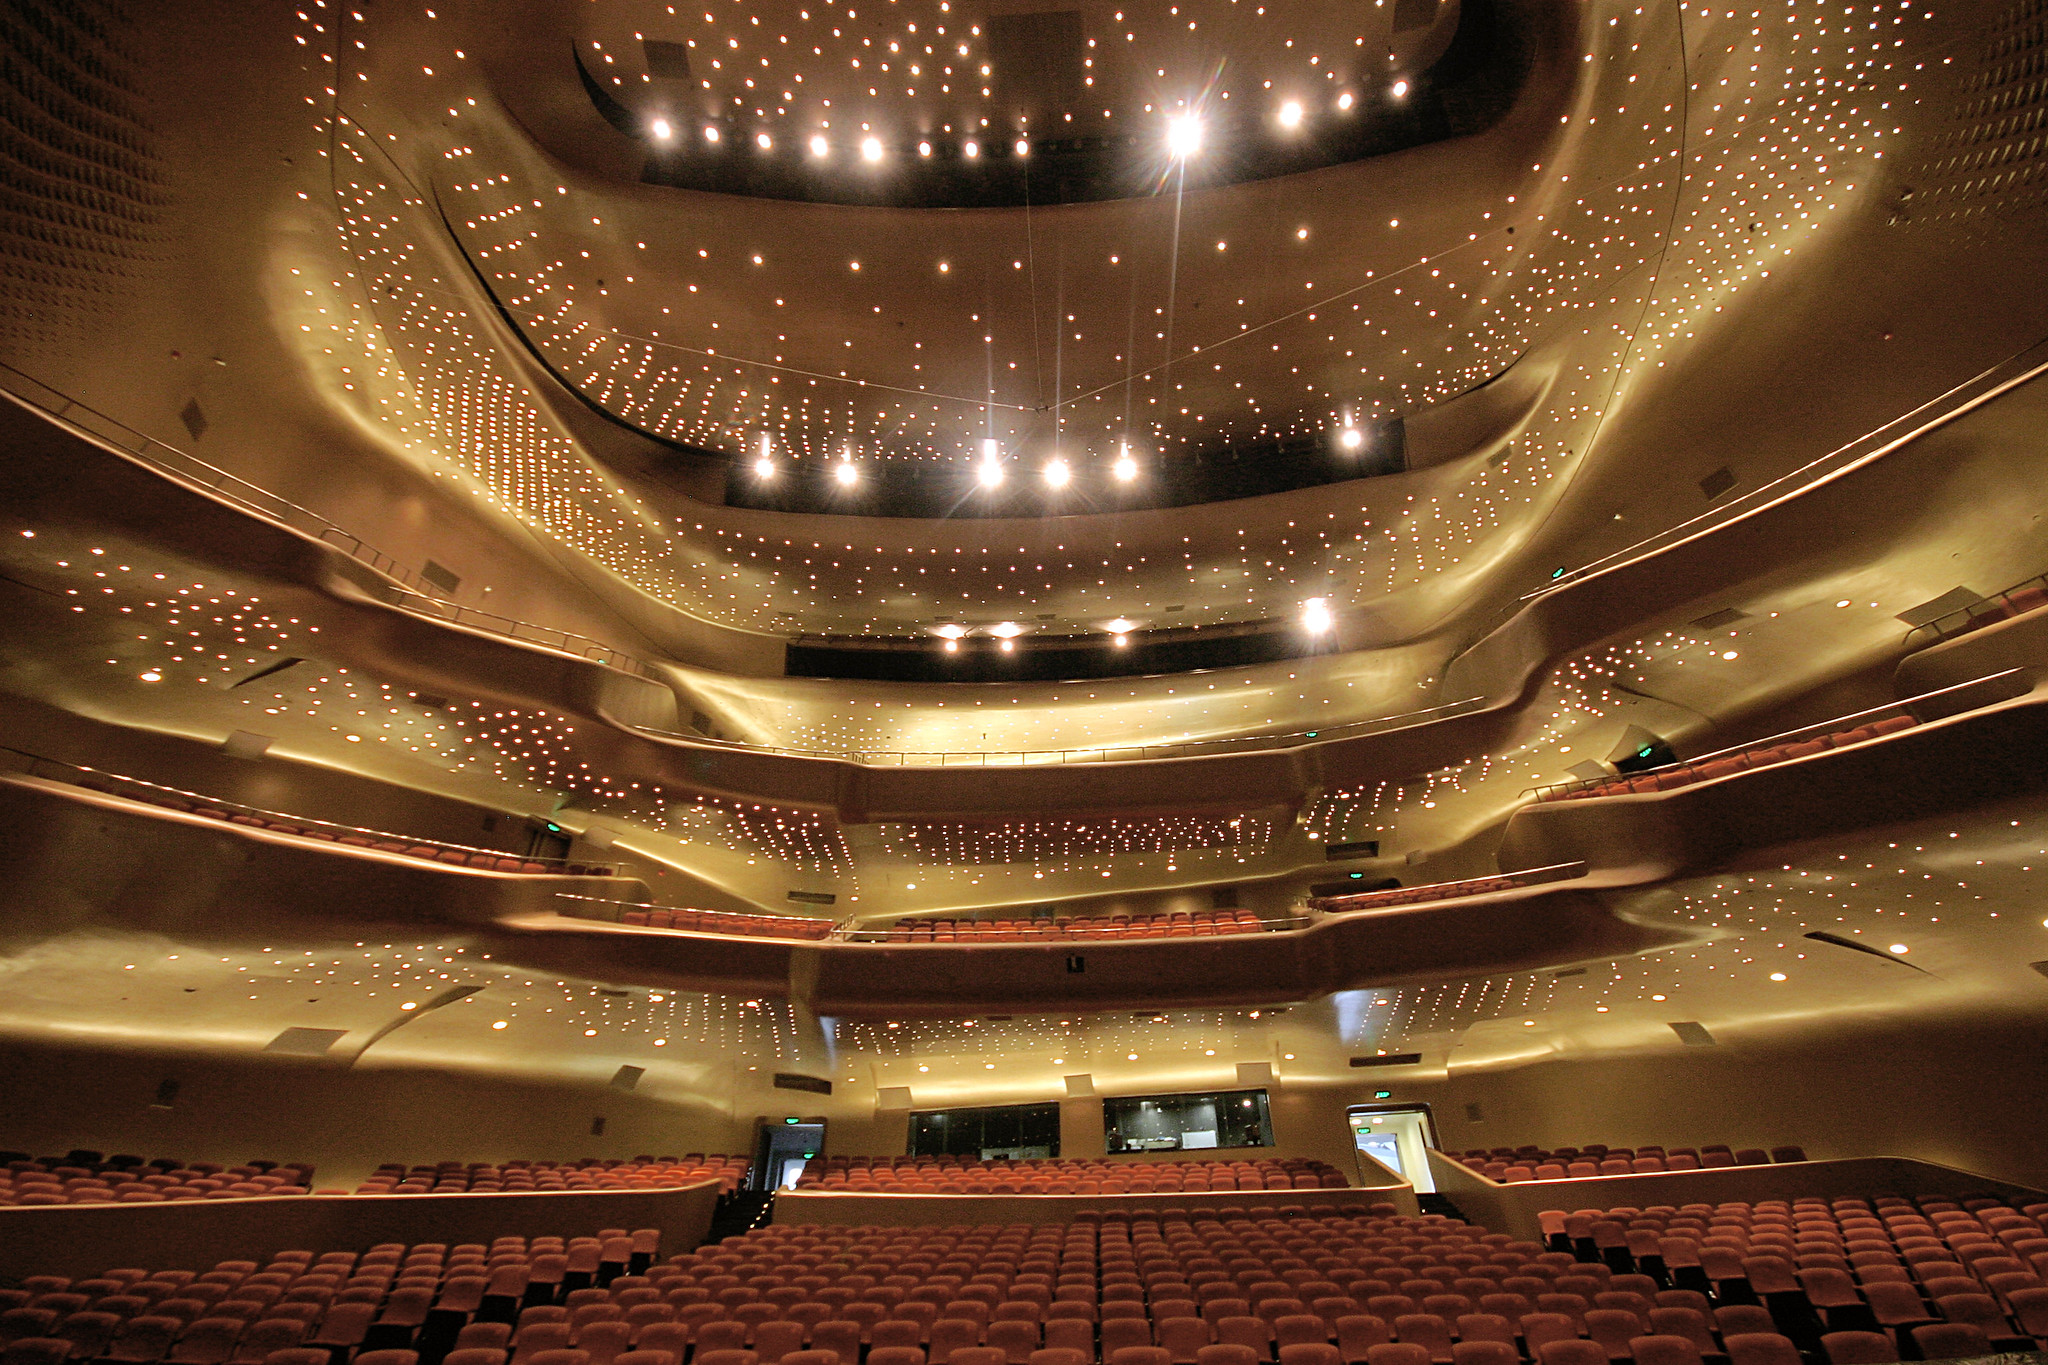 The interior of the Guangzhou Opera House 2048×1365 By Zaha Hadid